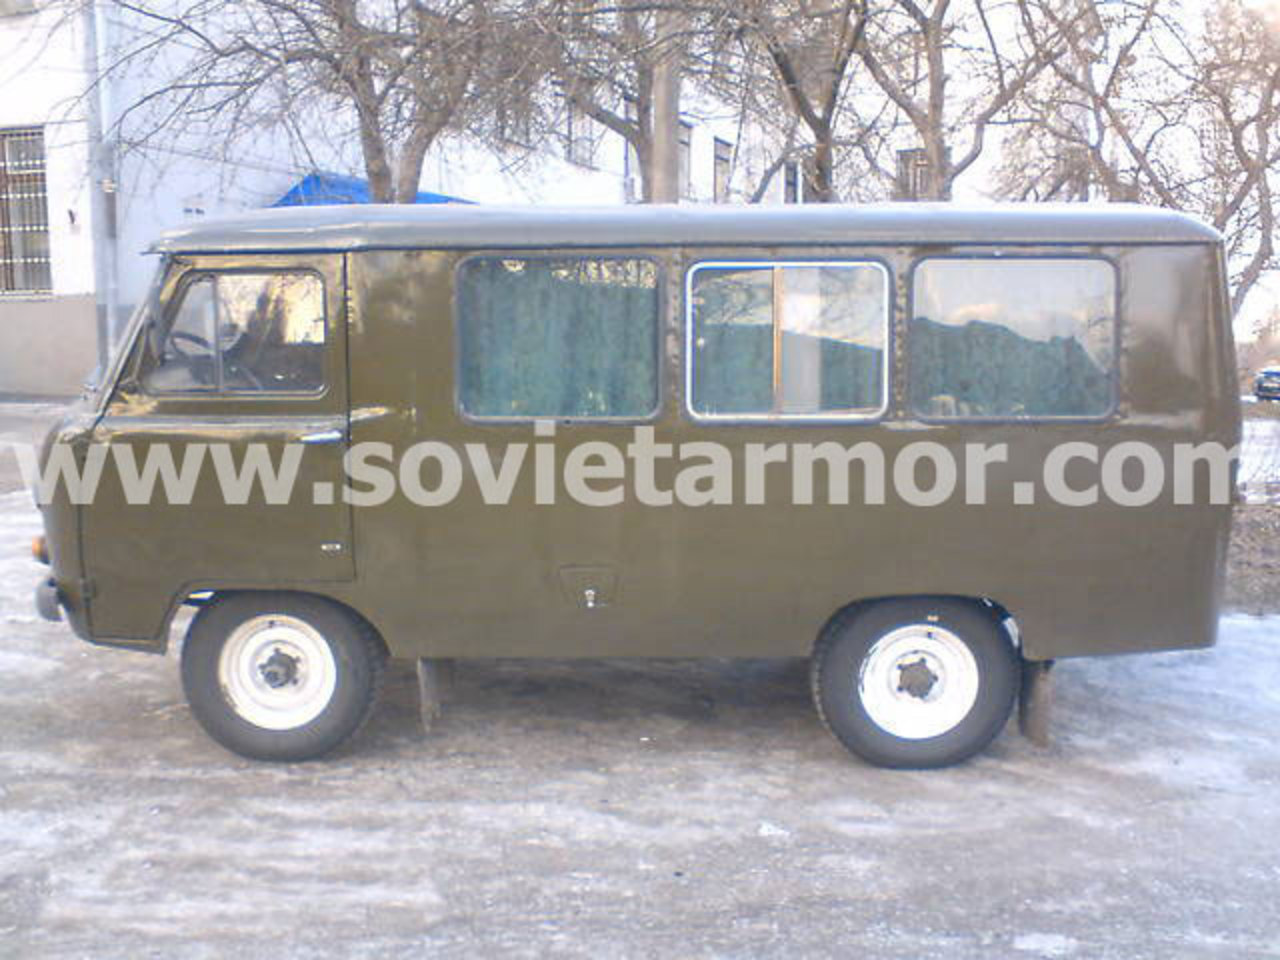 Soviet Armor :: UAZ-